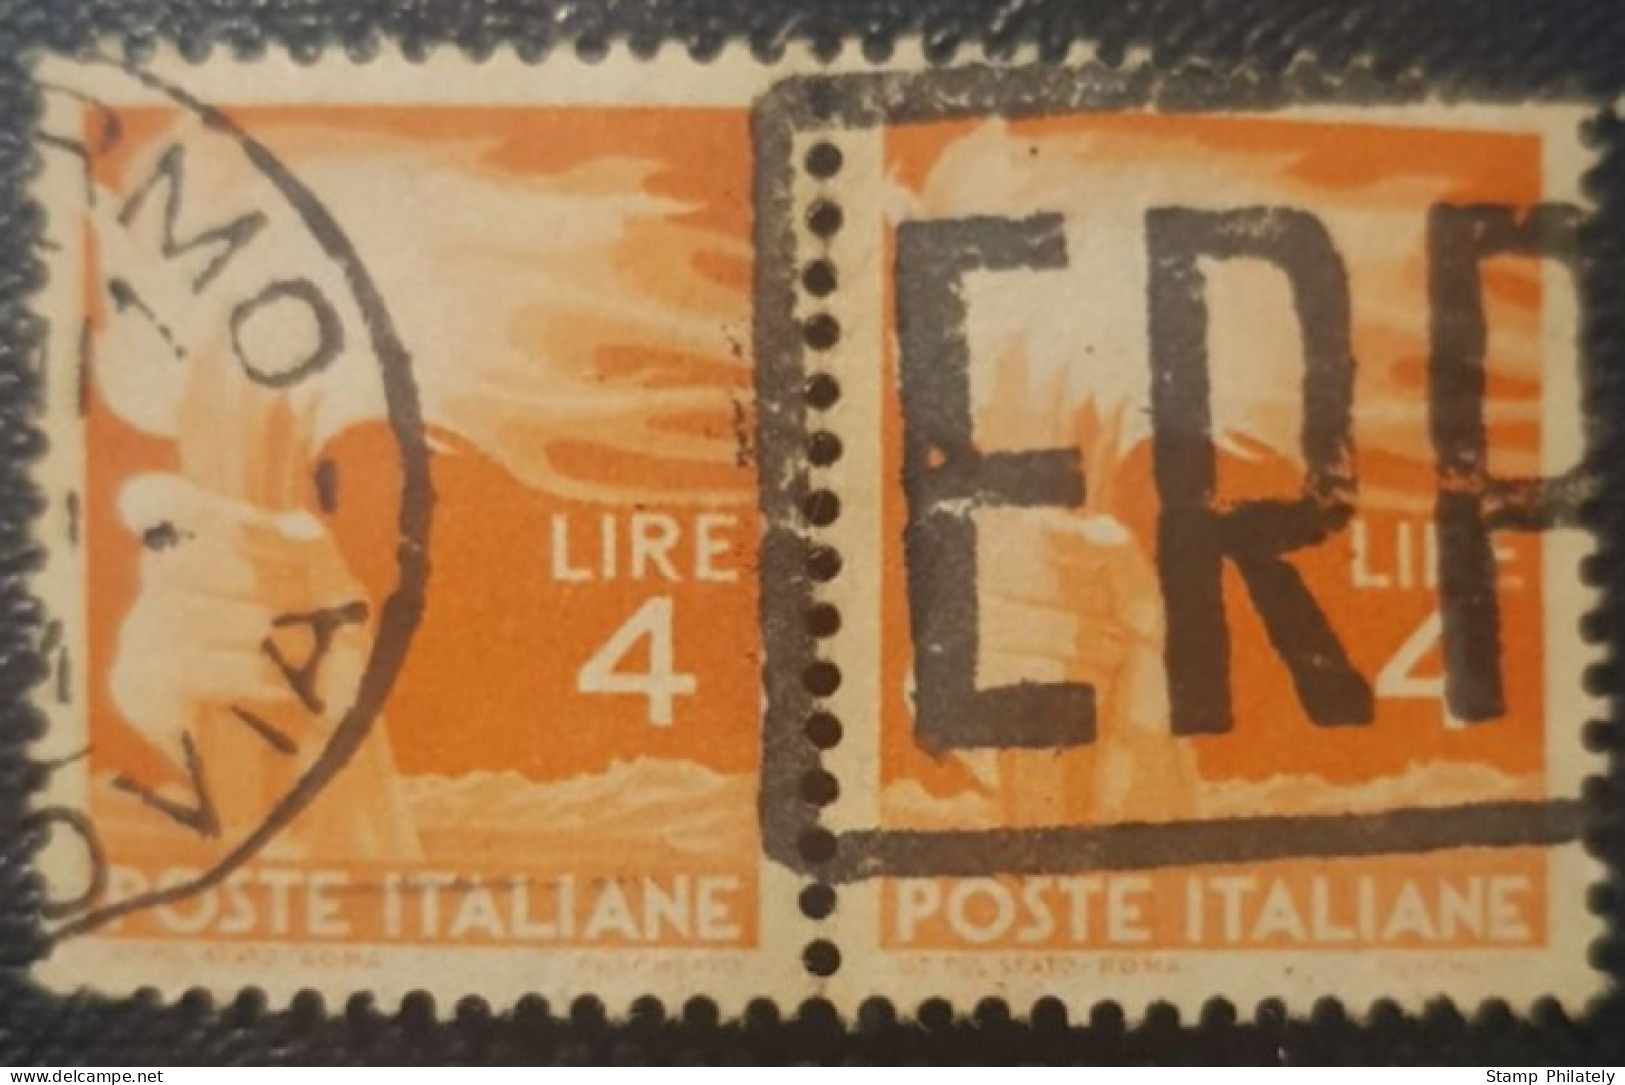 Italy 4L Used Pair Postmark Stamp Democracy - Used